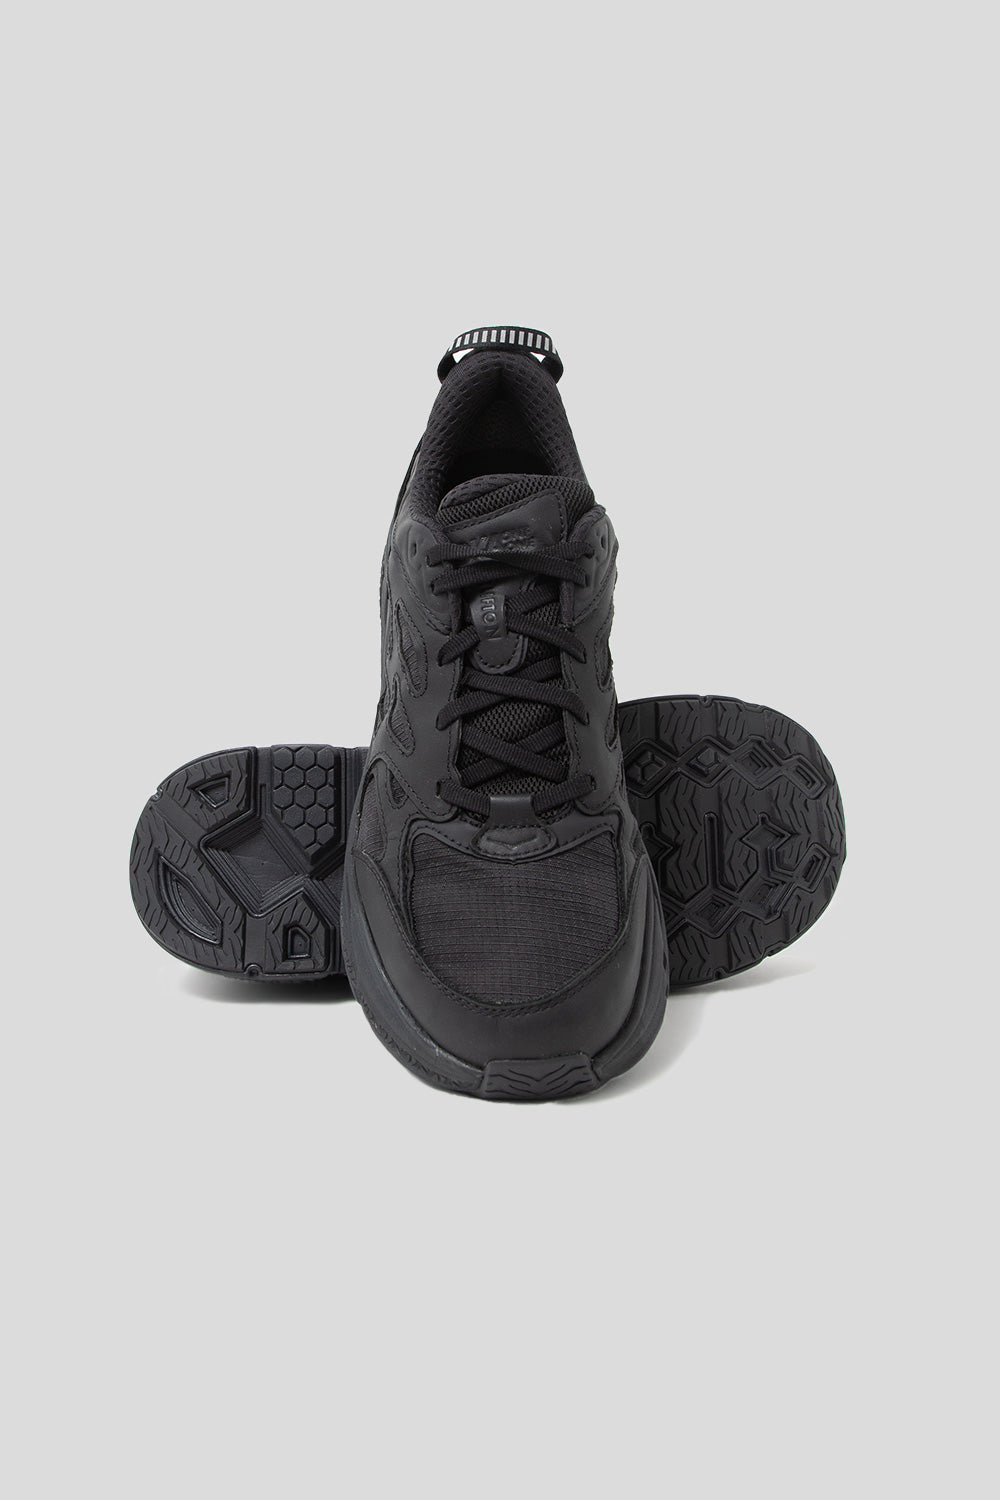 Hoka Bondi L GTX Shoe in Black / Black | Wallace Mercantile Shop